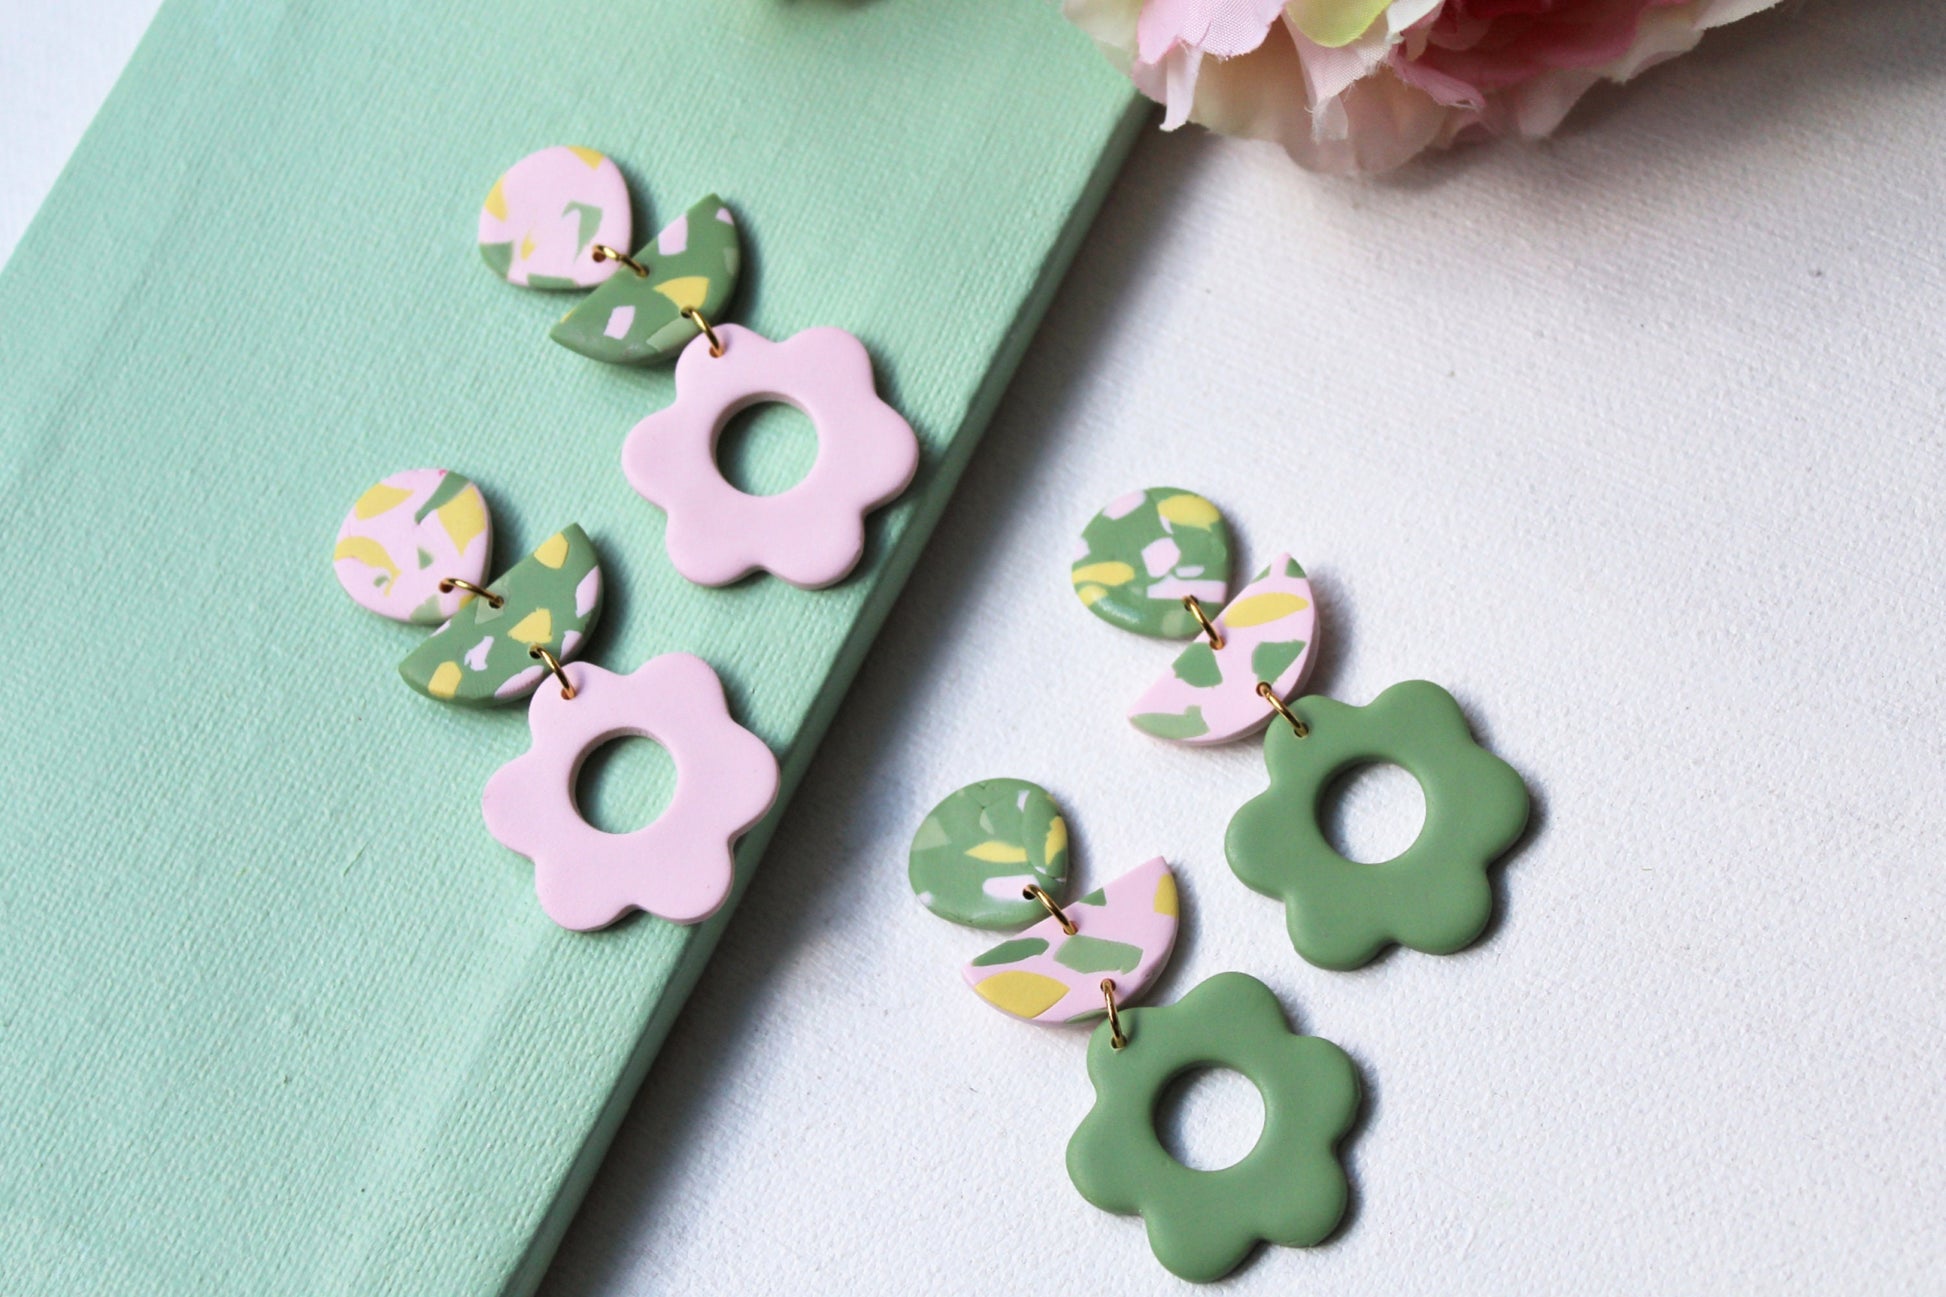 Floral Earrings, Flower Earrings, Polymer Clay Earrings, Spring Earrings, Statement Earrings, Green, Pink, Earrings, Handmade Clay Earrings